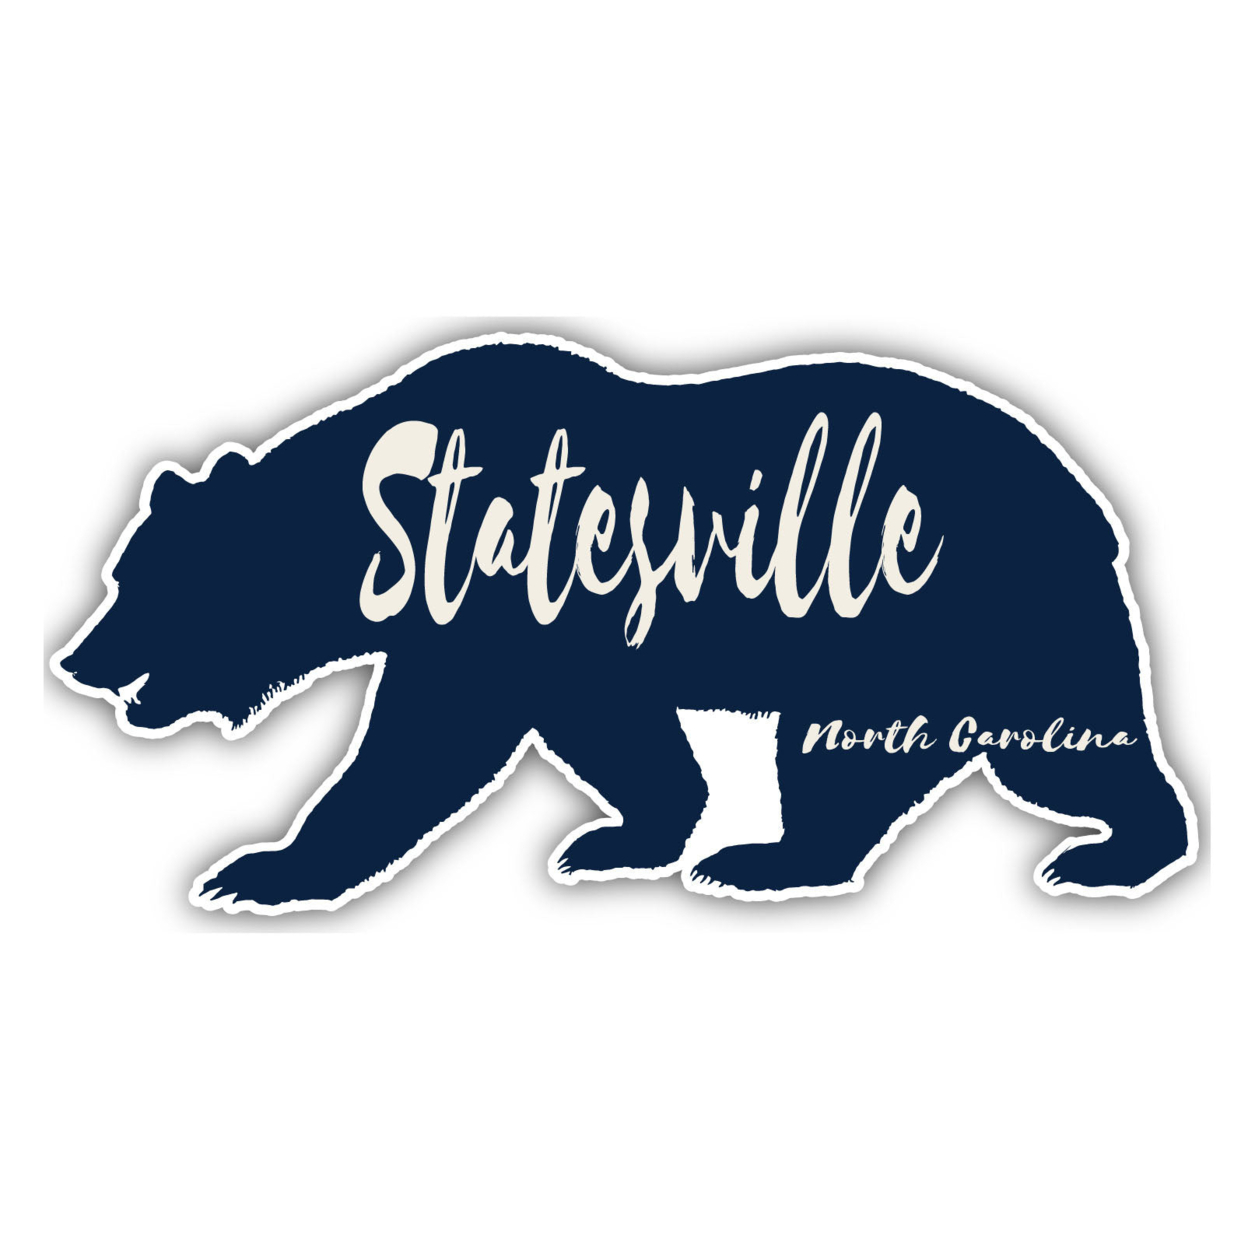 Statesville North Carolina Souvenir Decorative Stickers (Choose Theme And Size) - Single Unit, 2-Inch, Bear